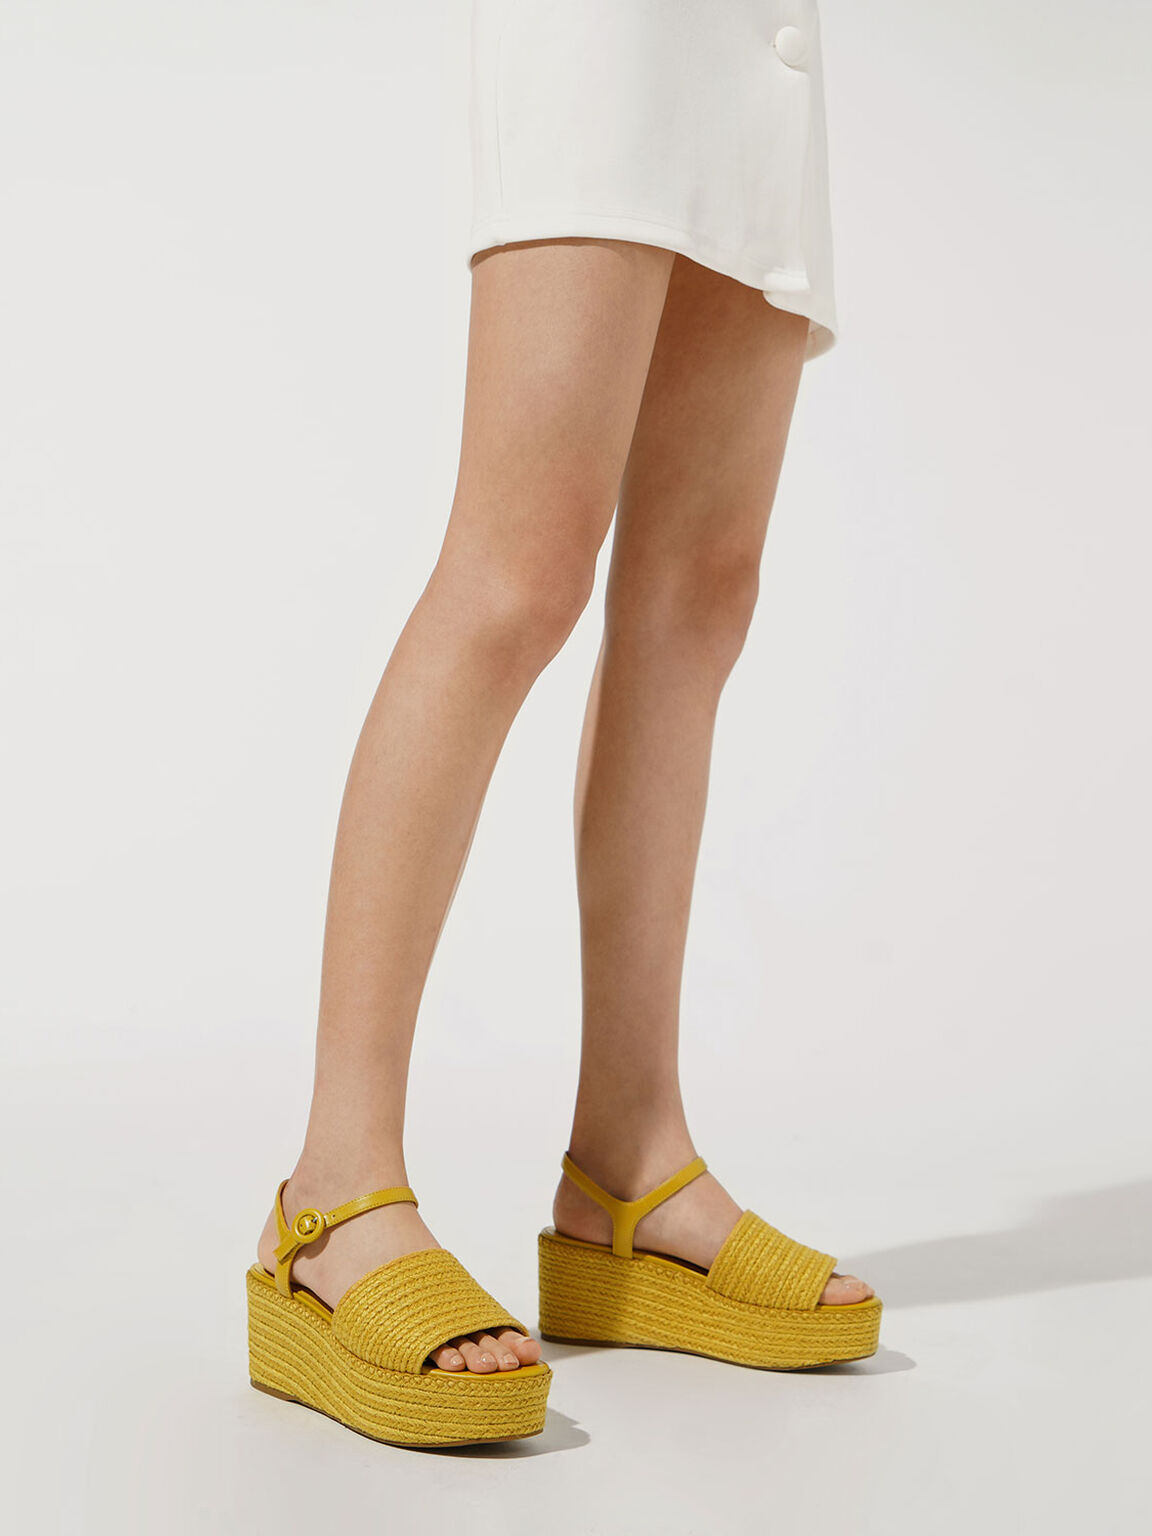 Espadrille Platform Sandals, Yellow, hi-res